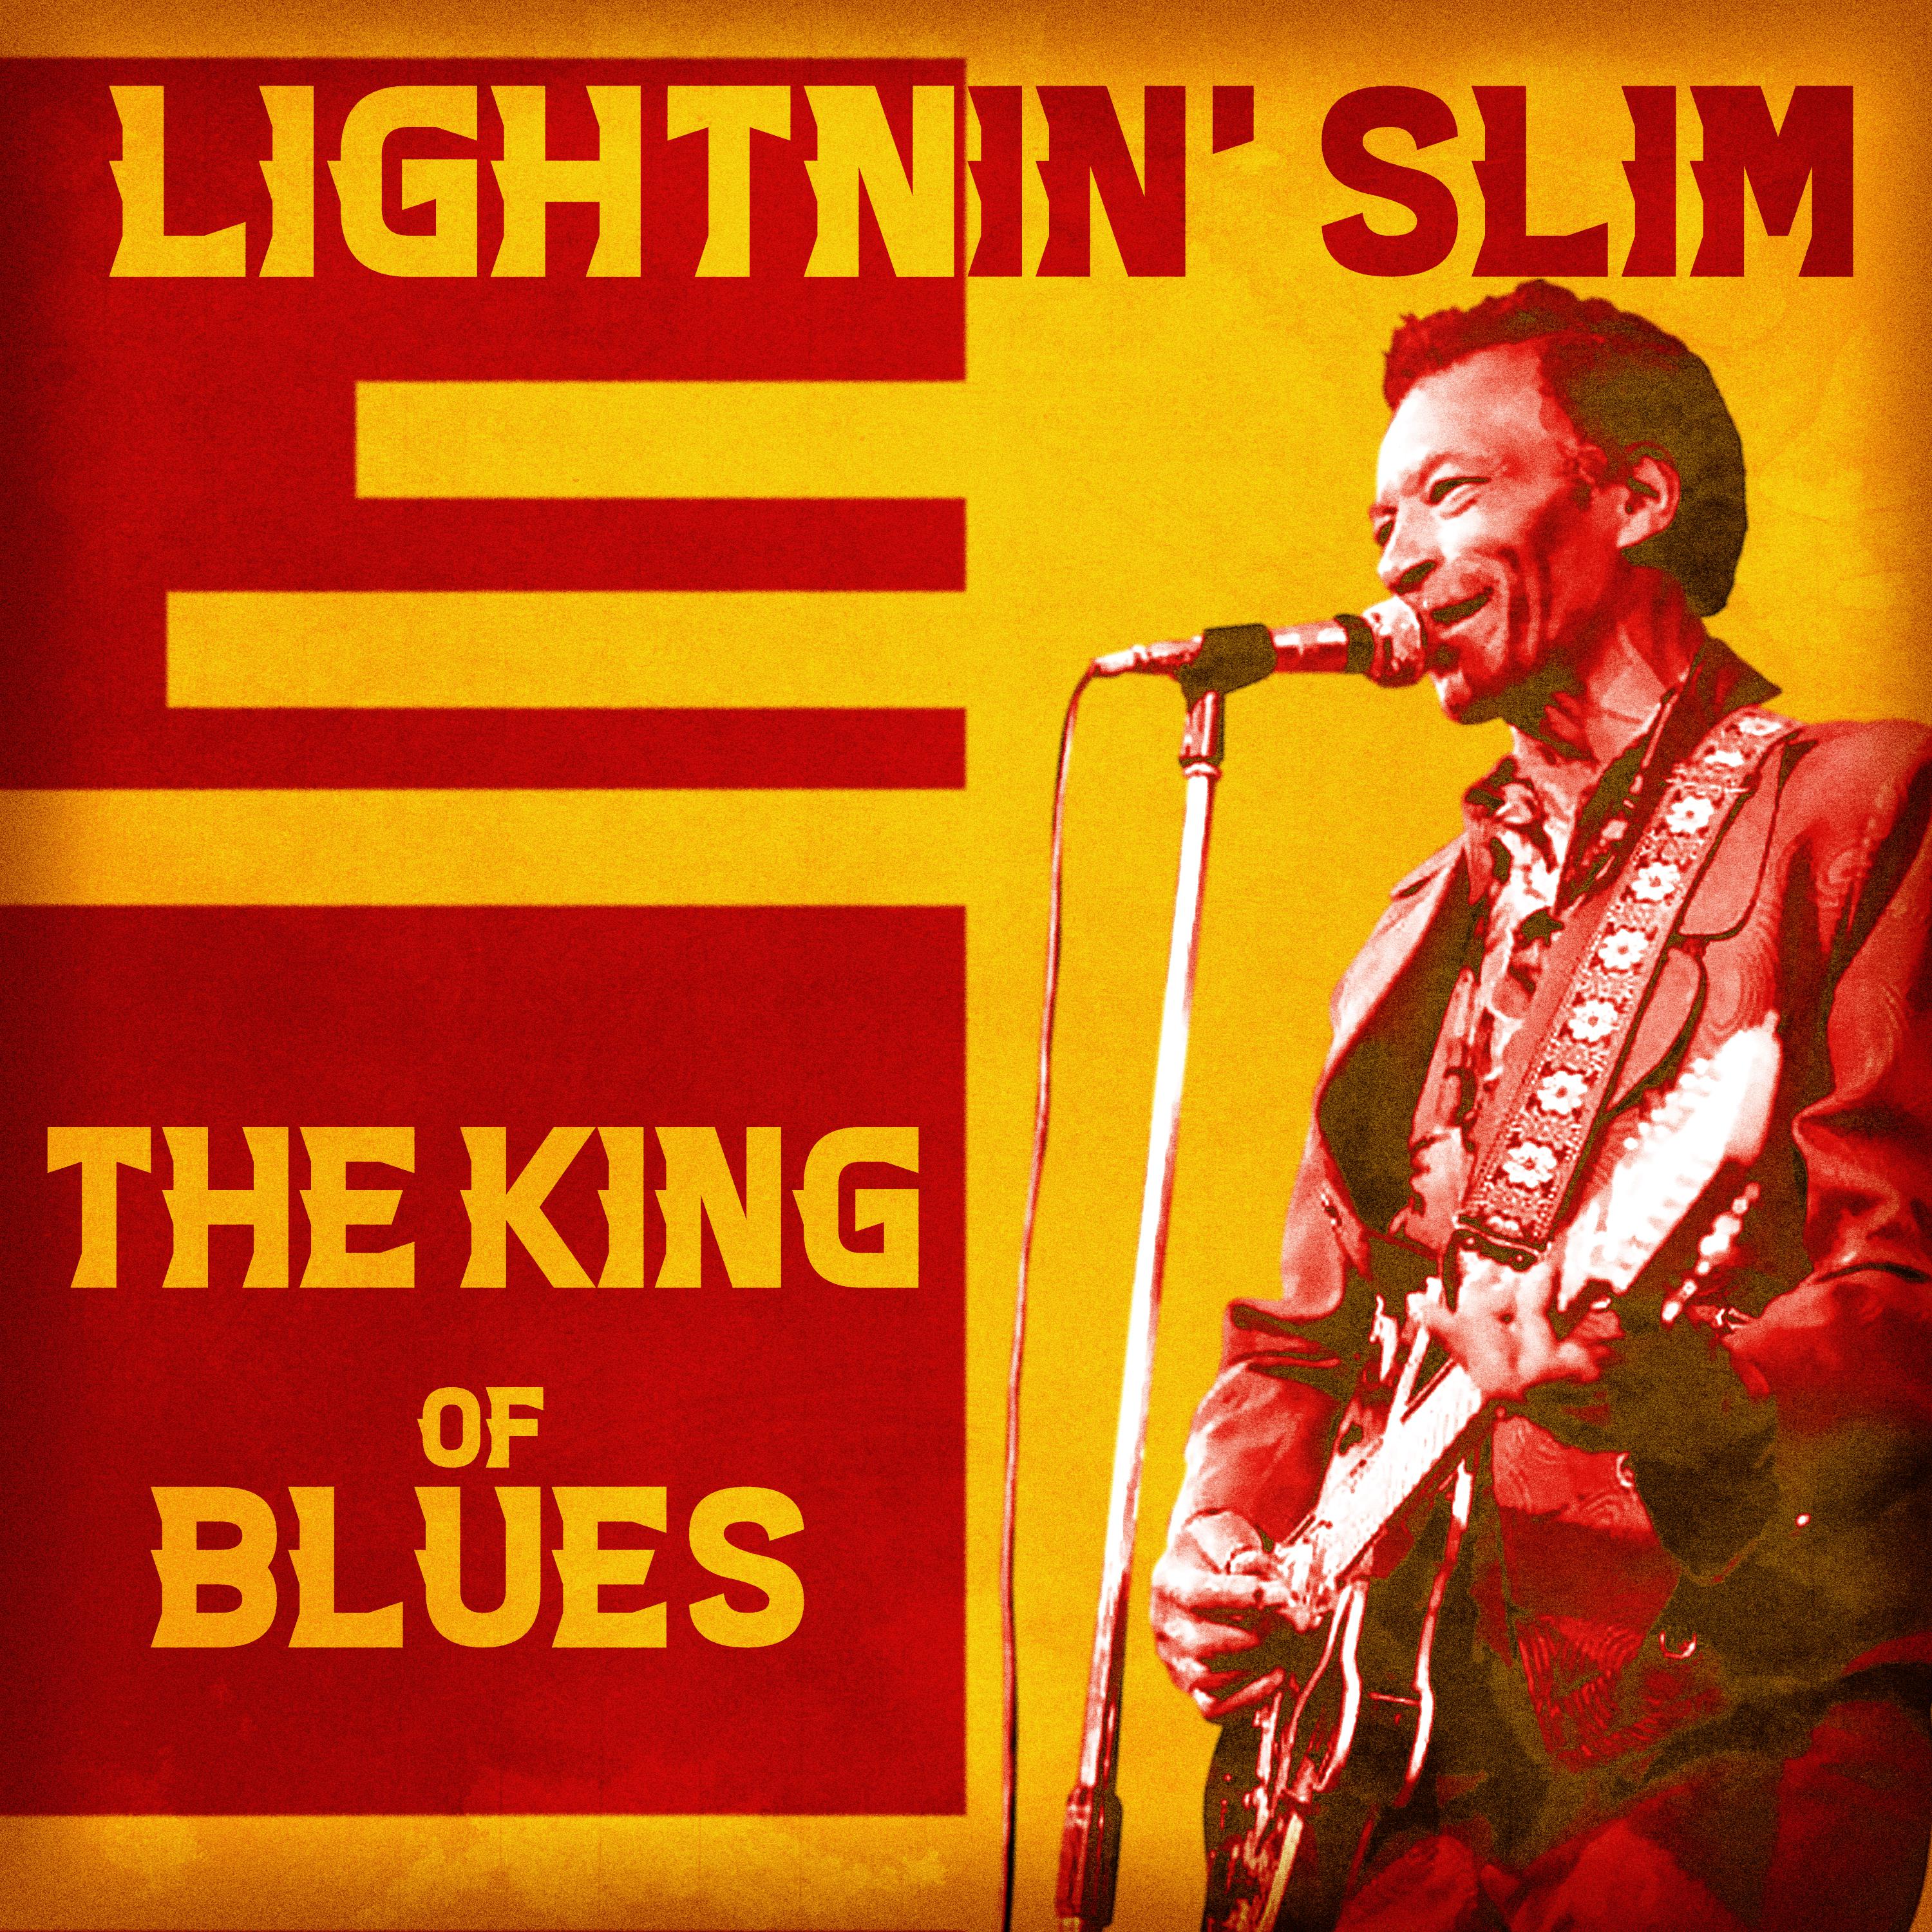 Lightnin' Slim - I Just Don't Know (Remastered)